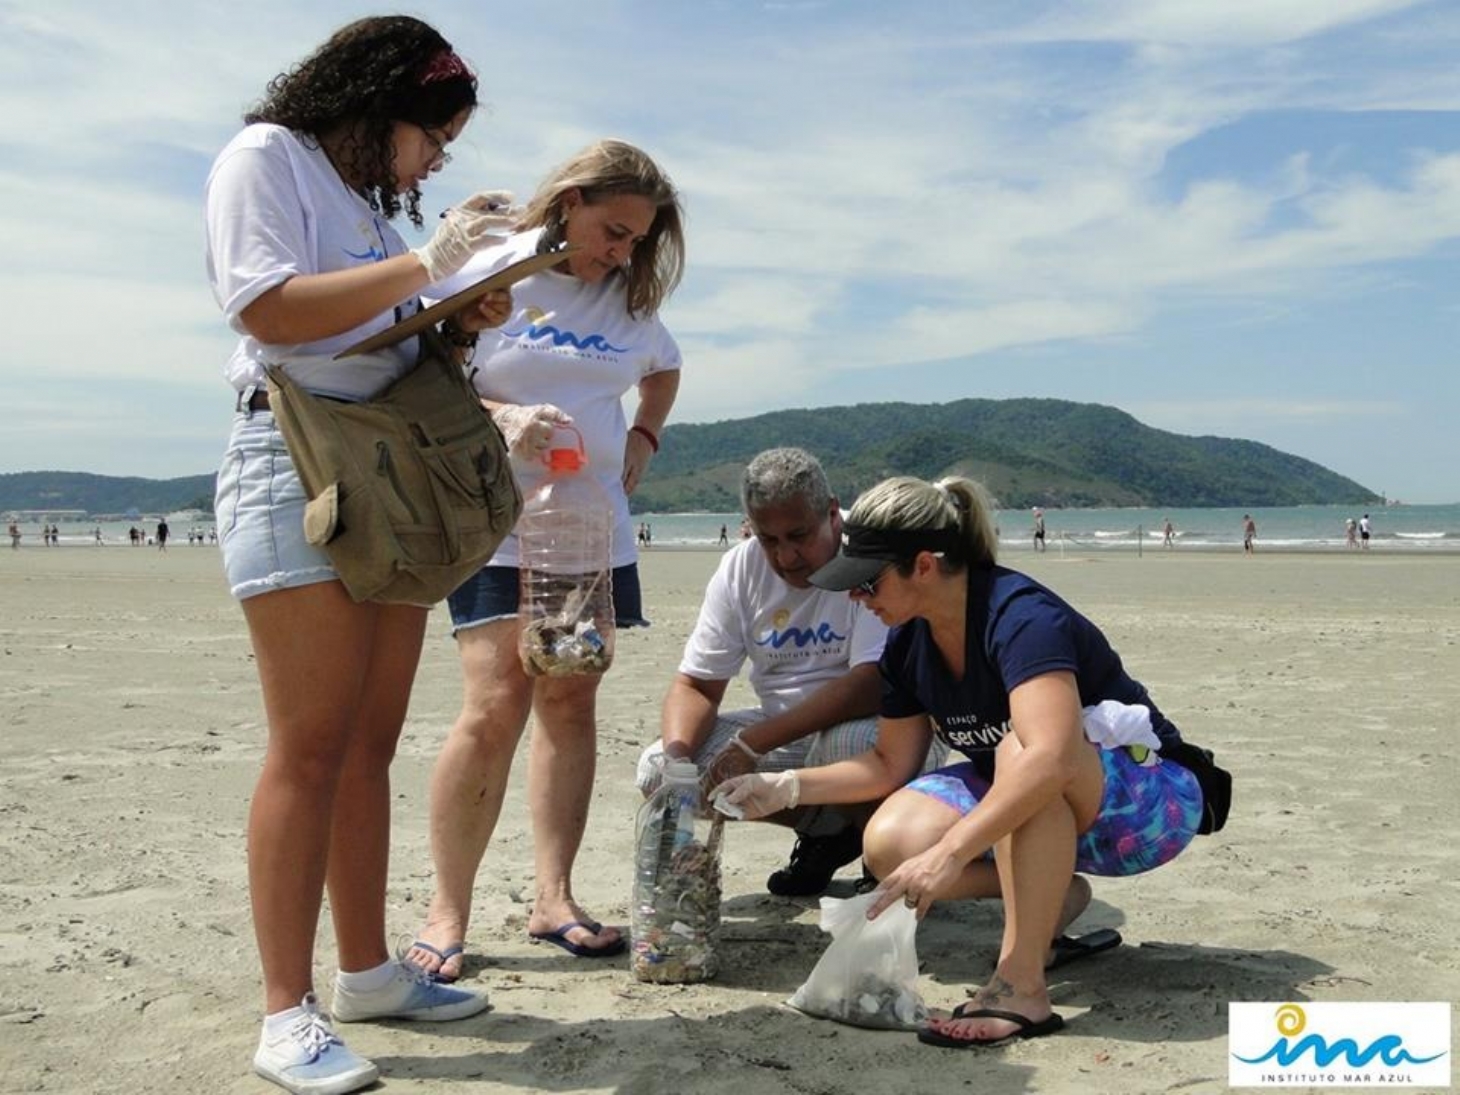 Instituto Mar Azul promove mutirão de limpeza de praia de Santos | Jornal da Orla